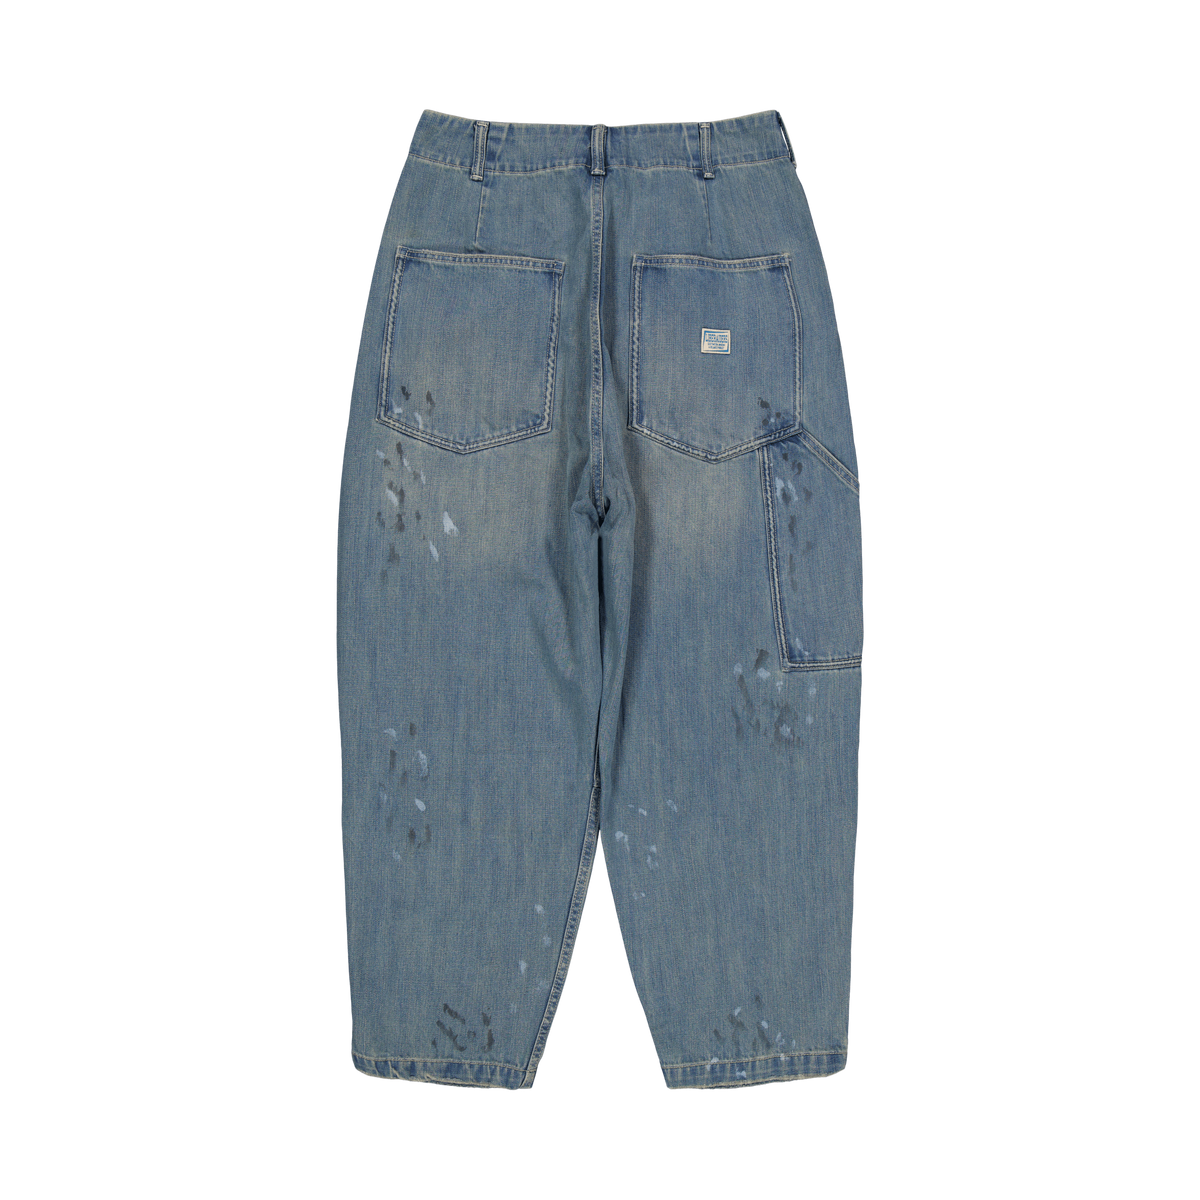 Liberaiders® Sarrouel Men's Chino Painter Pants